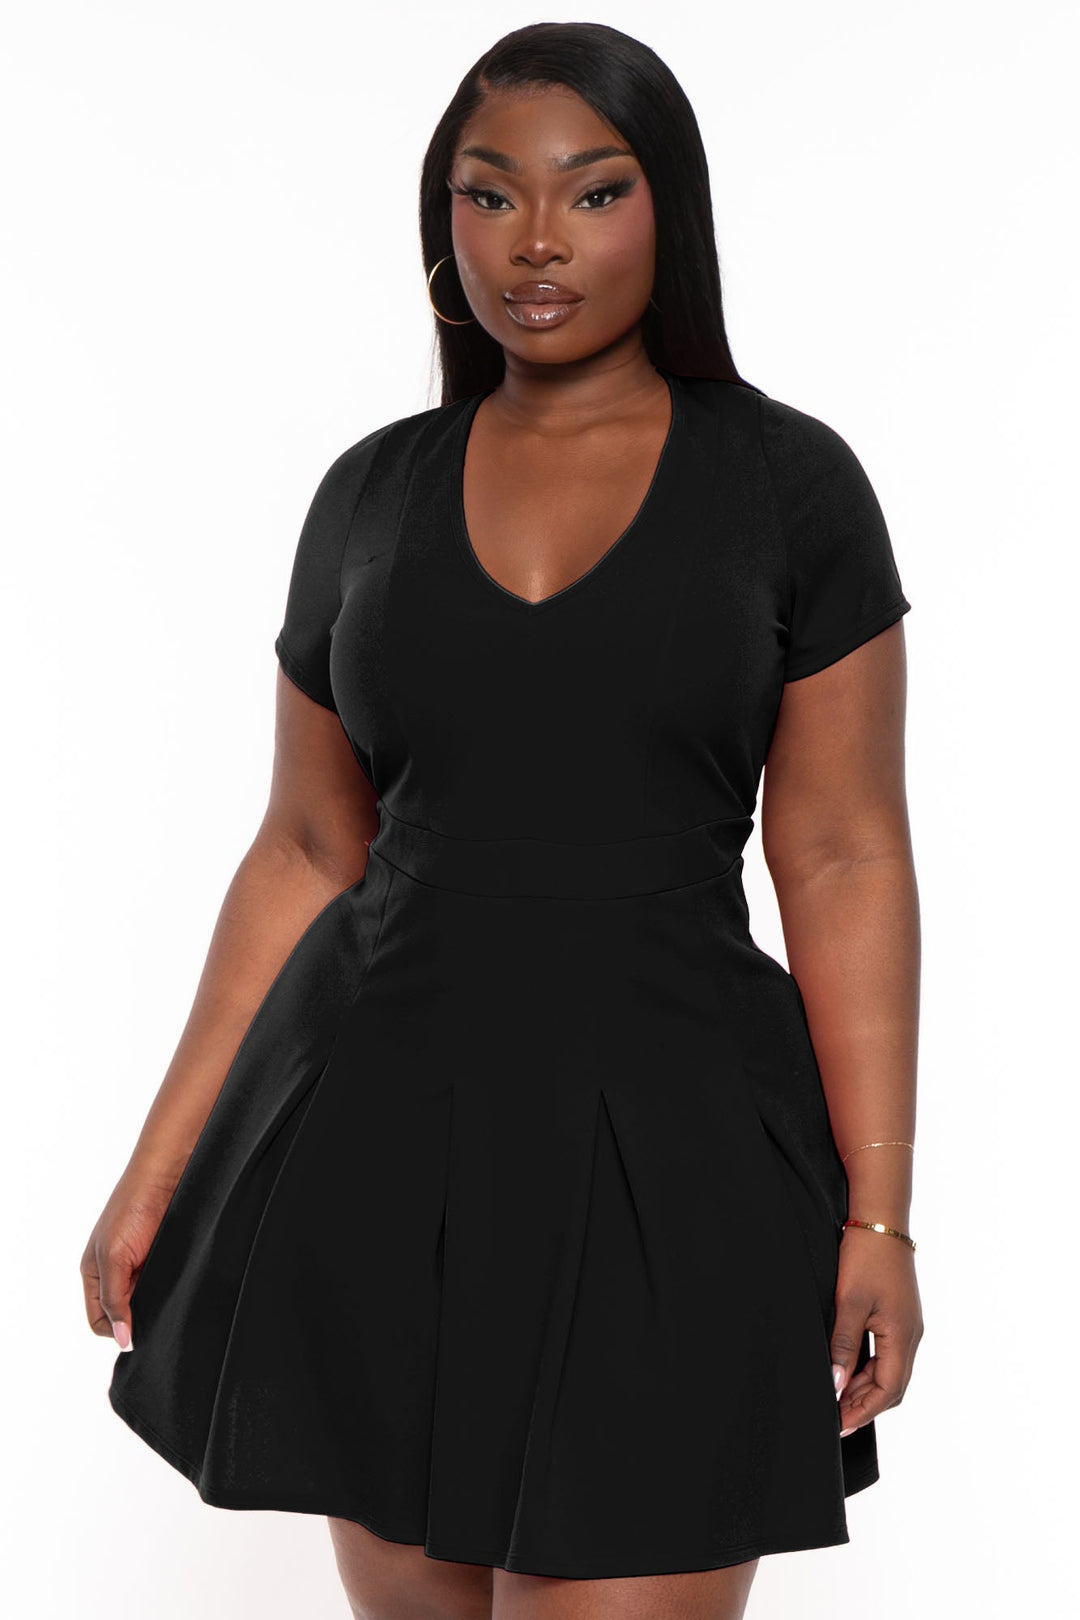 Women's Plus Size All Class Black Dress